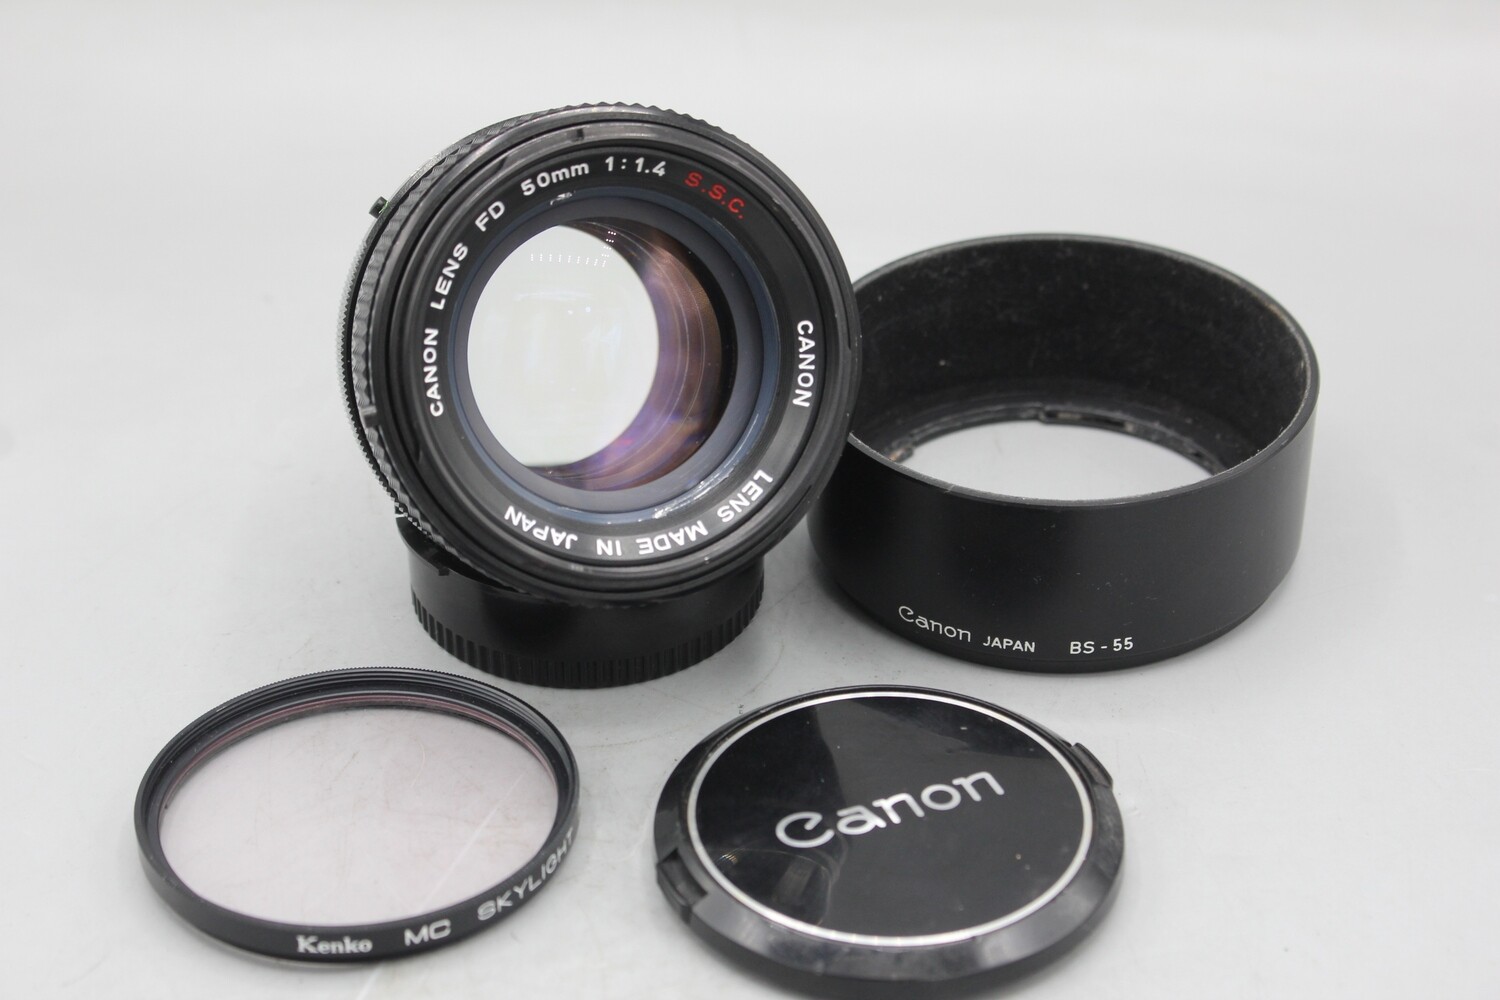 Canon FD 50mm 1:1.4 SSC Lens for Canon SLR Cameras